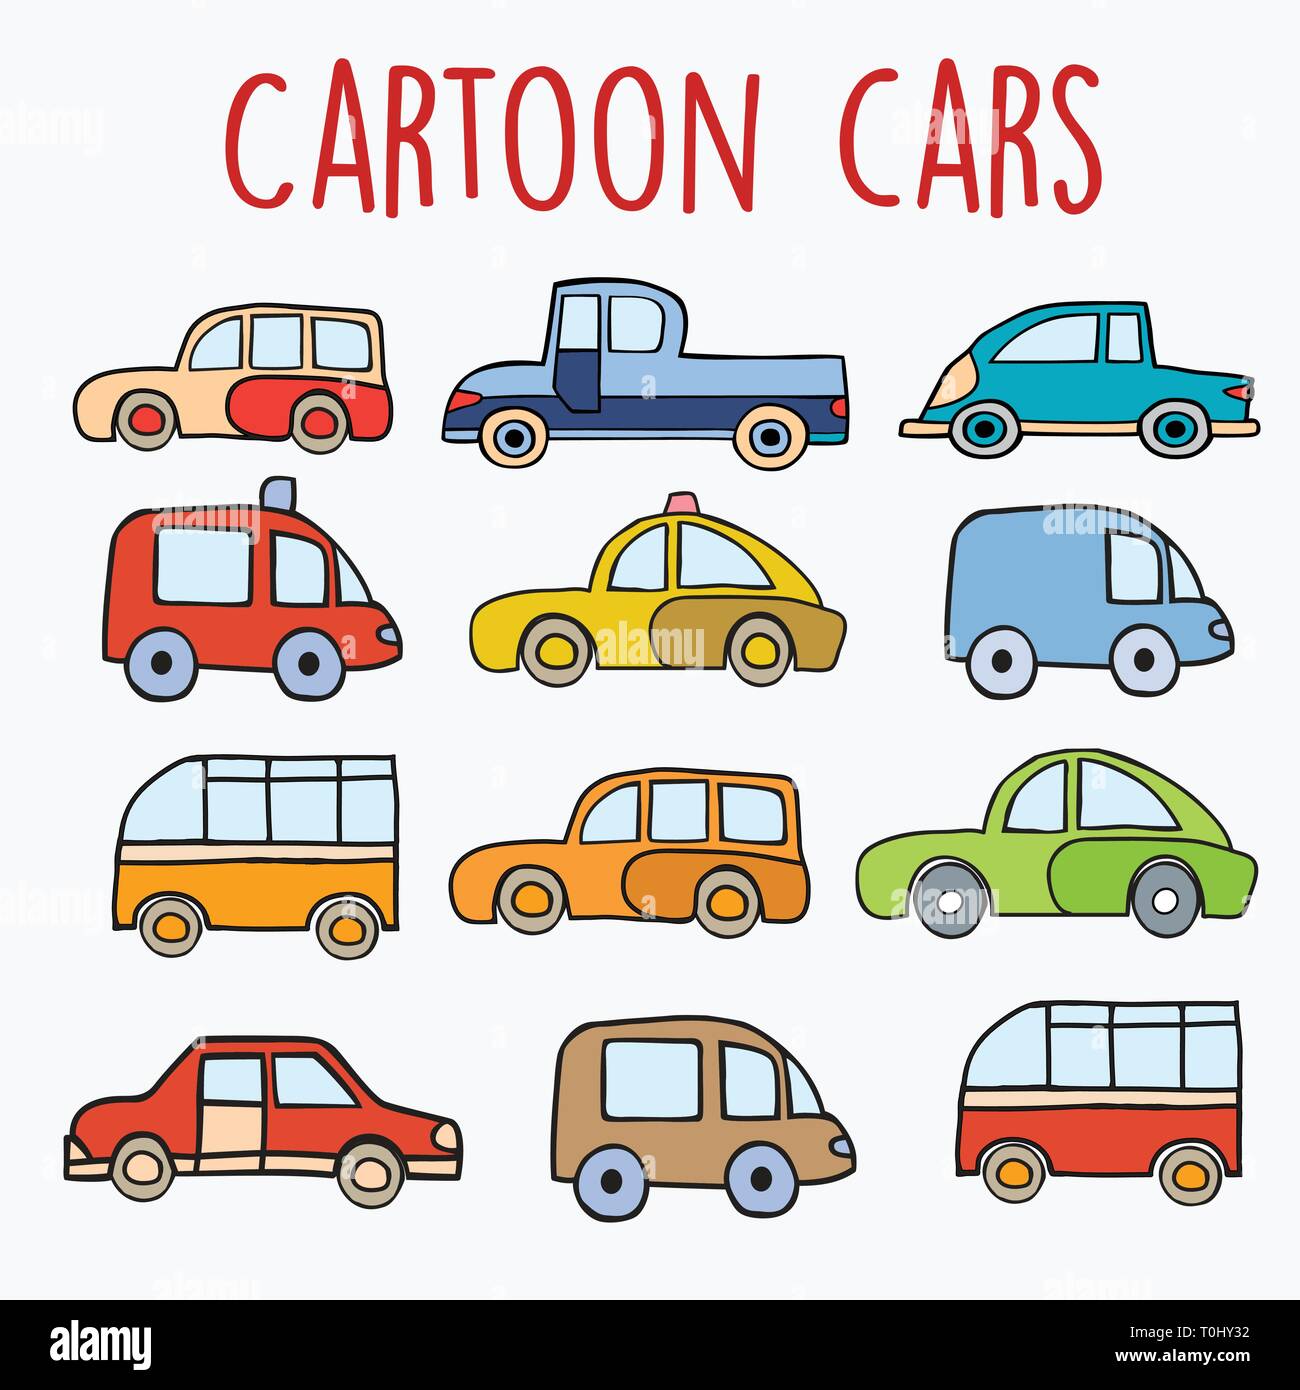 Cartoon Car Printable